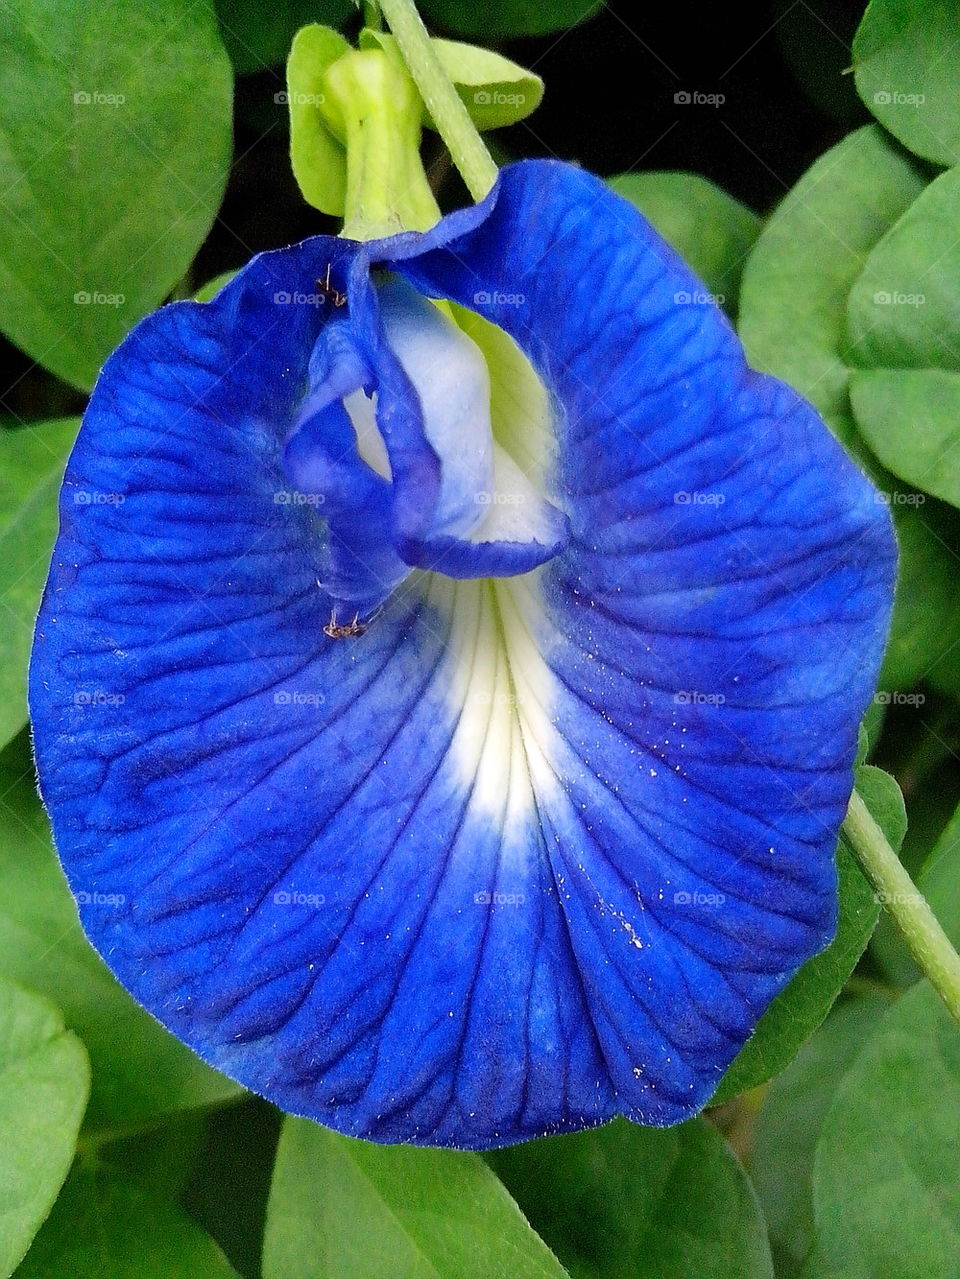 Oval shaped flower